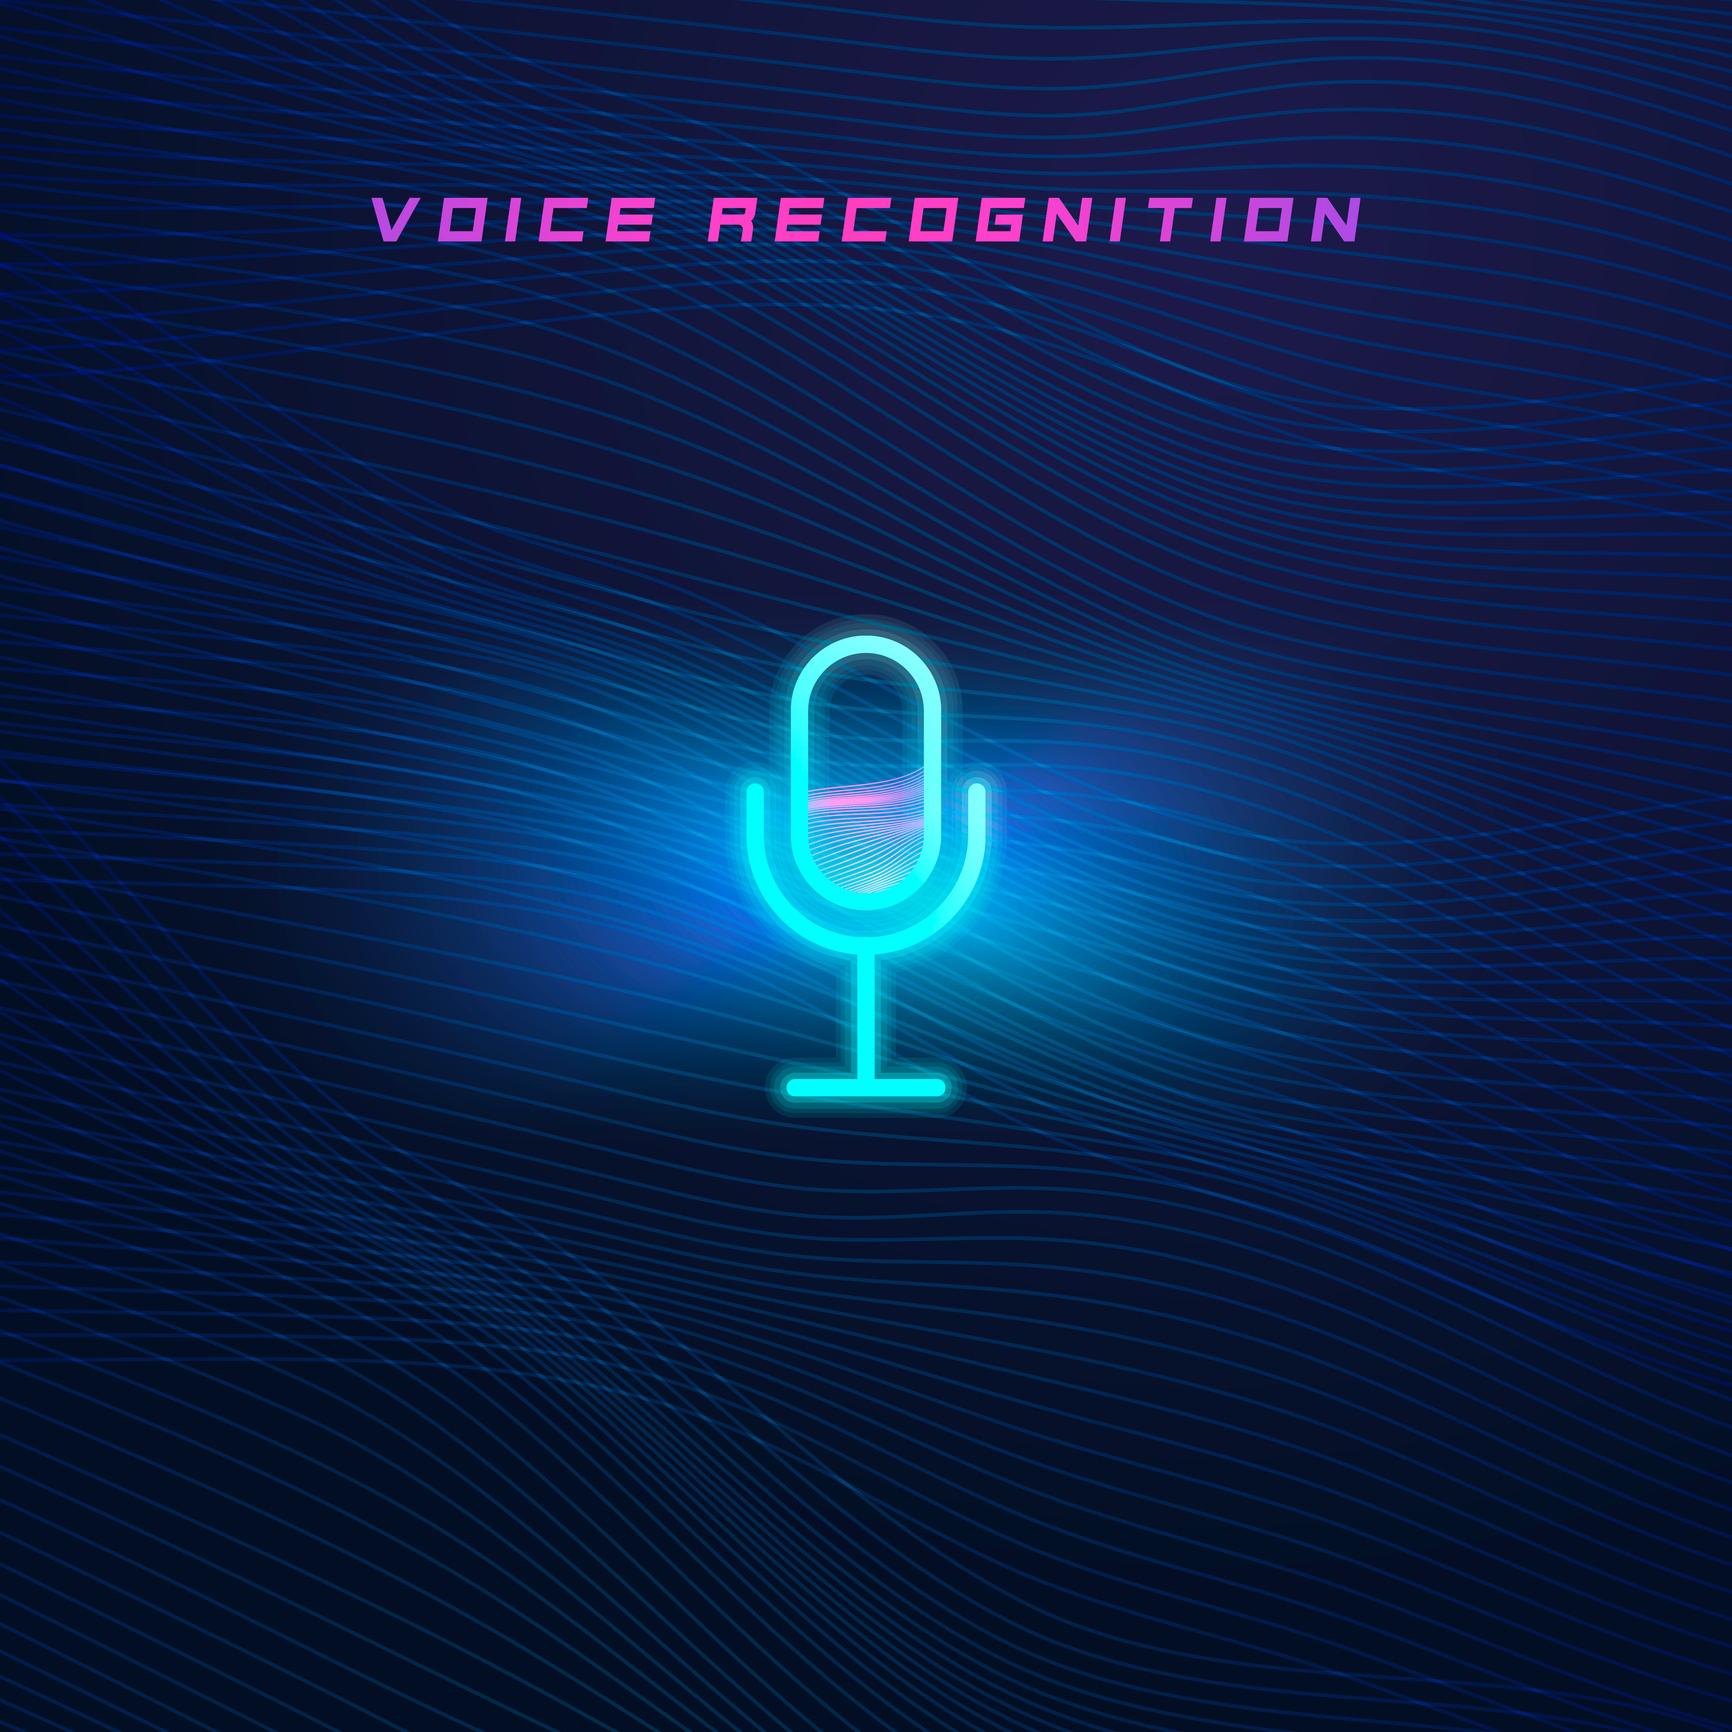 Image of a voice recognition program.